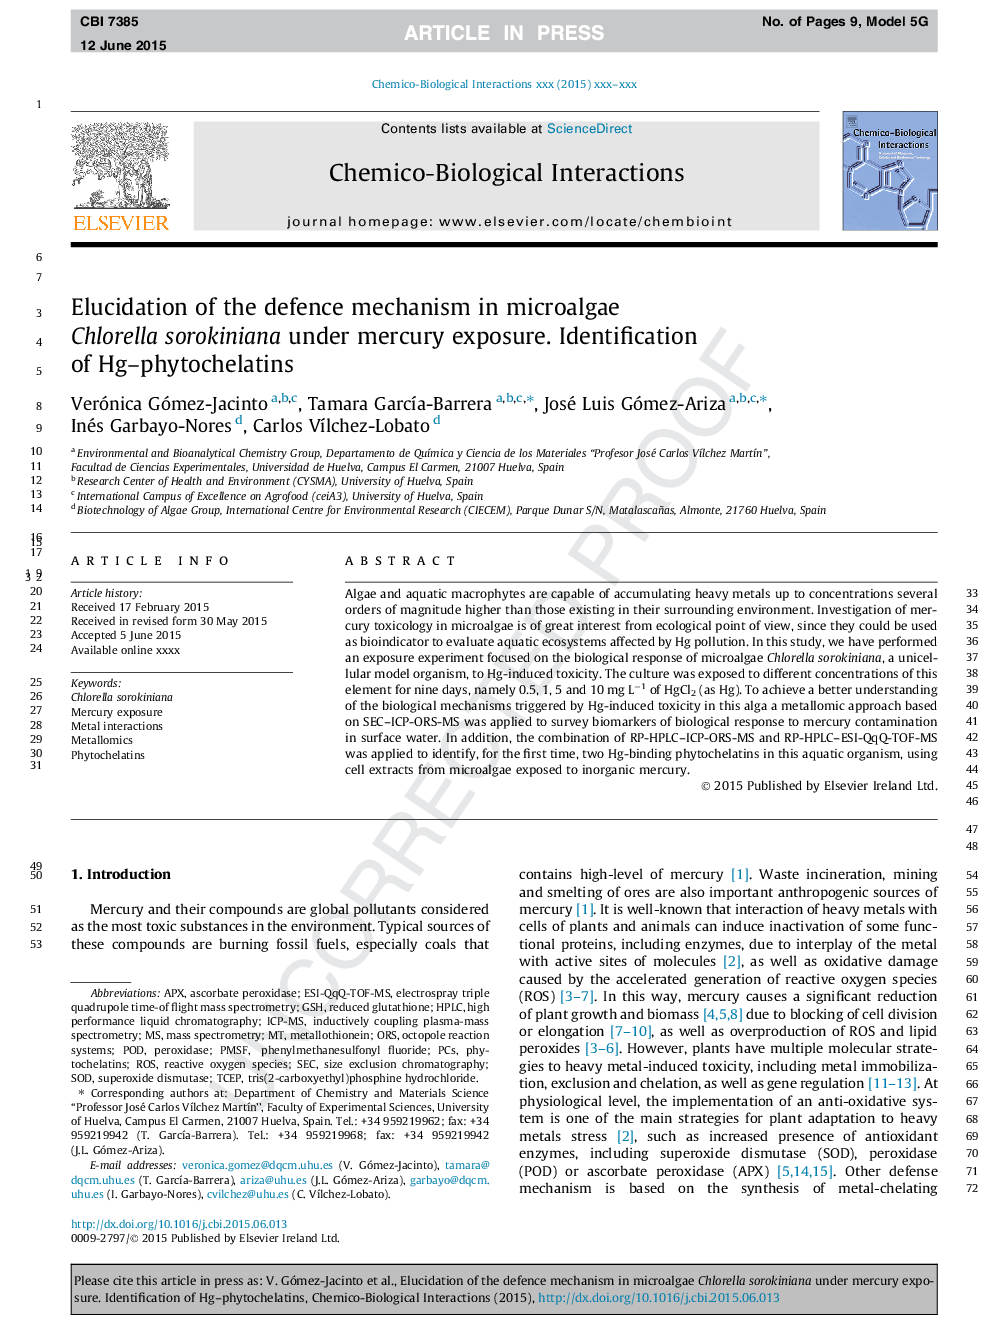 Elucidation of the defence mechanism in microalgae Chlorella sorokiniana under mercury exposure. Identification of Hg-phytochelatins